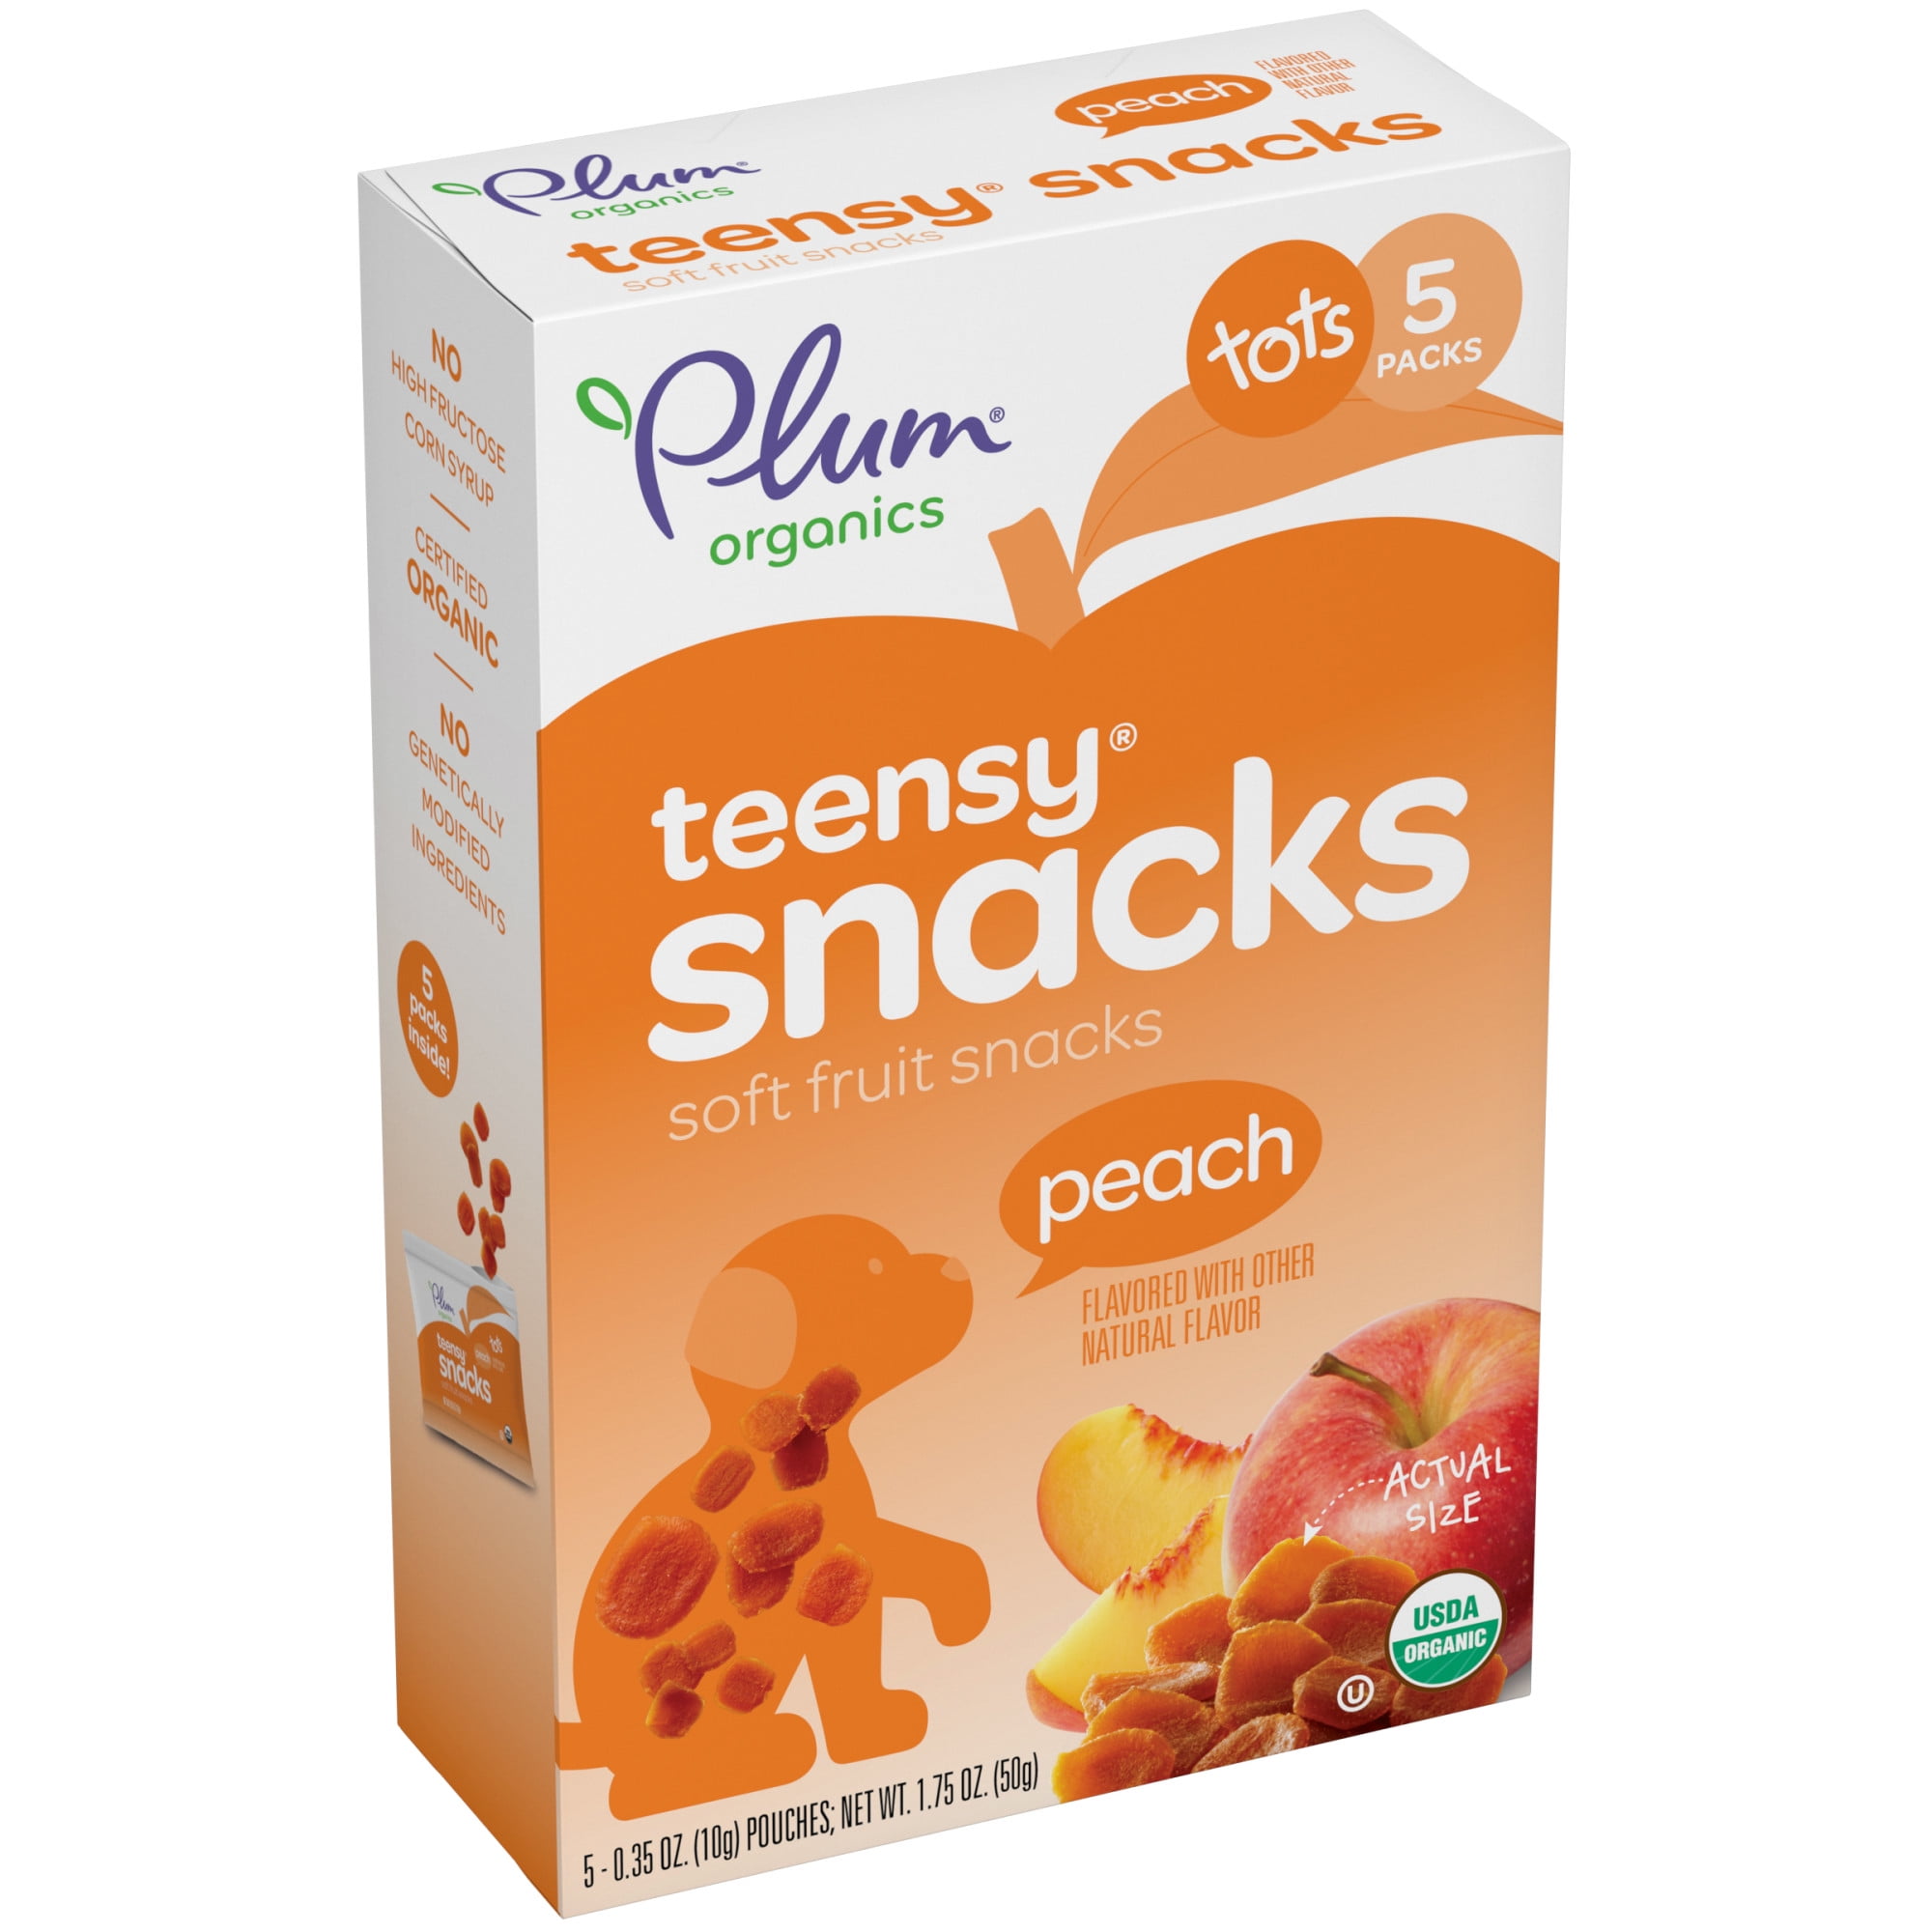 Plum Organics Teensy Snacks Soft Fruit Snacks for Toddlers: Peach - 5 Ct, Baby Food